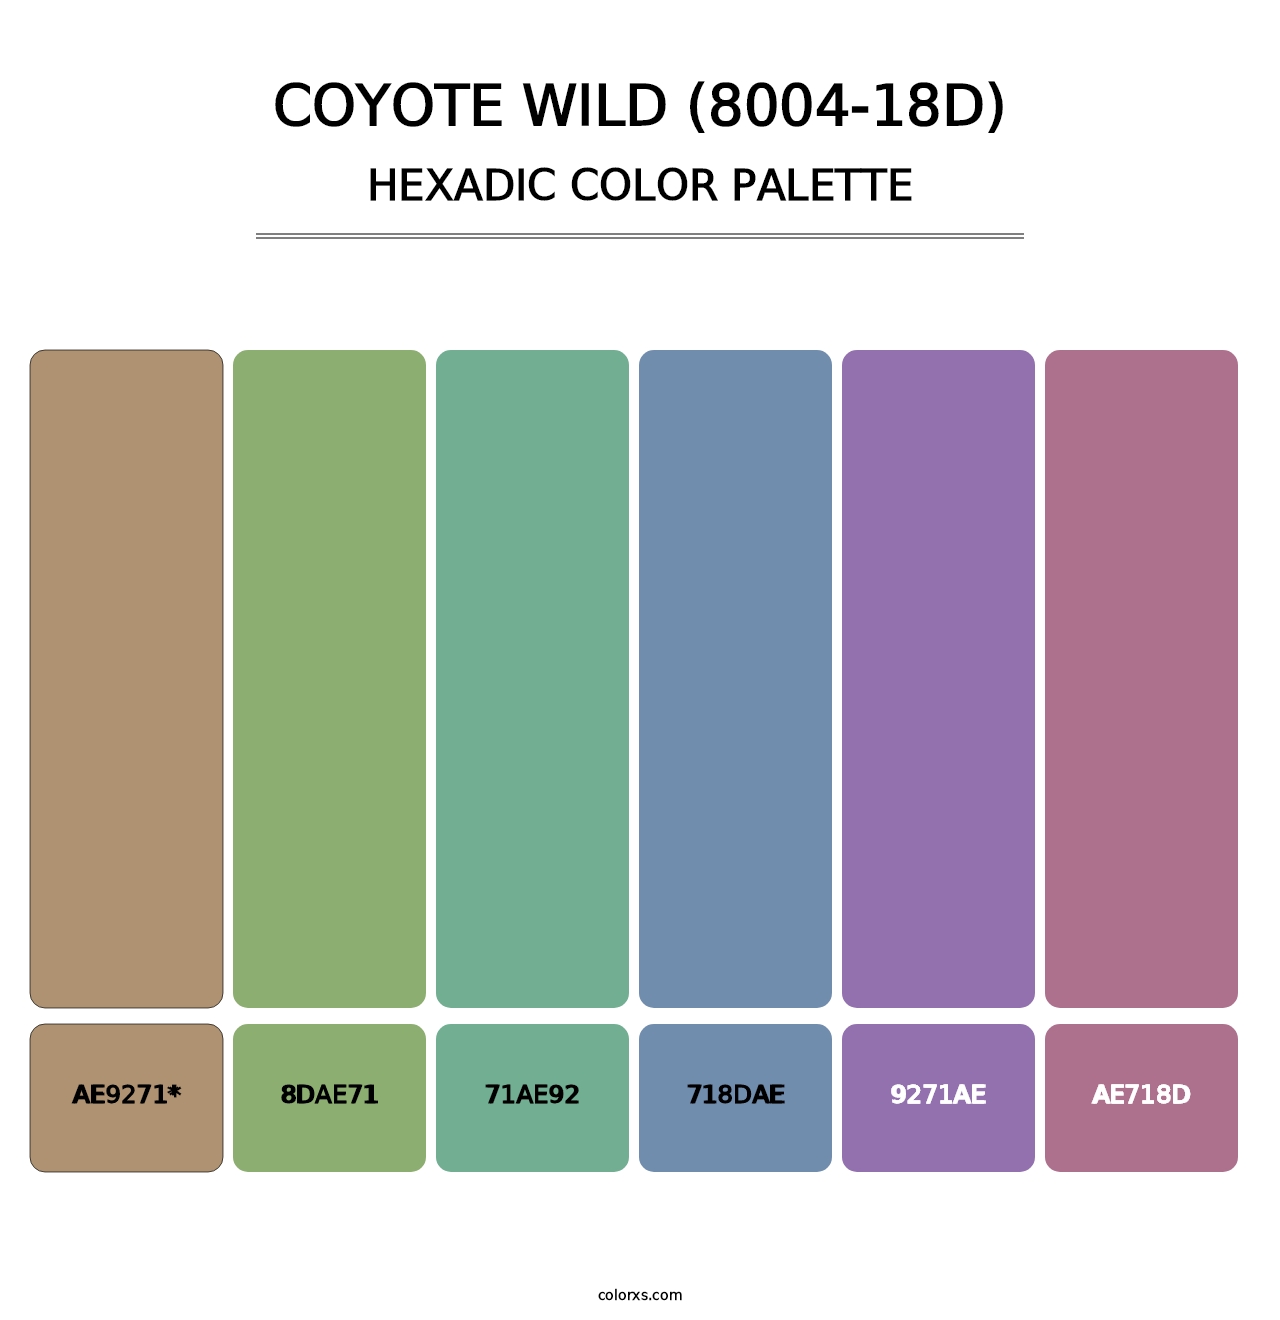 Coyote Wild (8004-18D) - Hexadic Color Palette